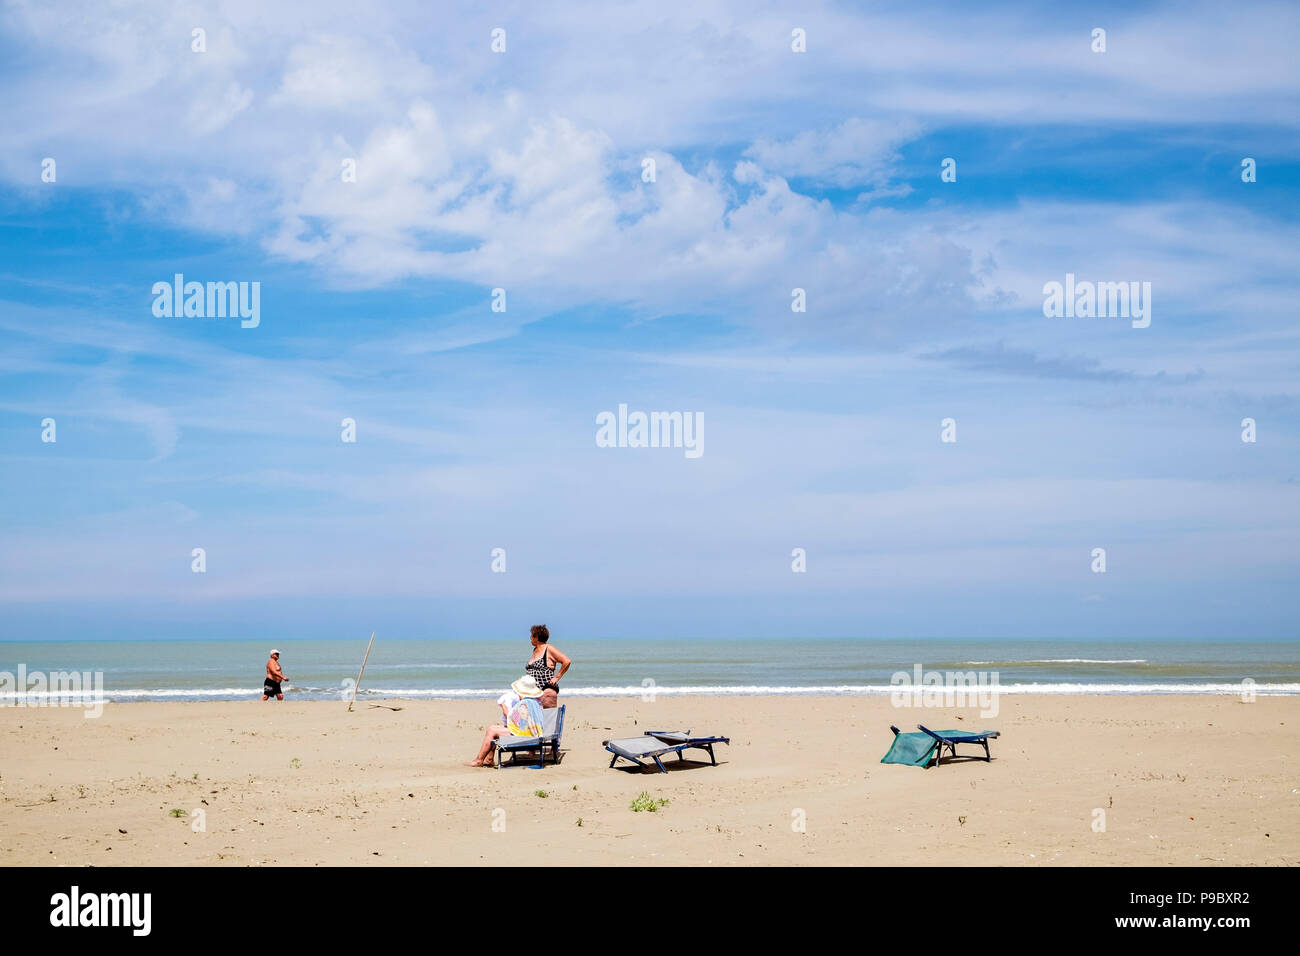 Albania, Divjake, the beach Stock Photo